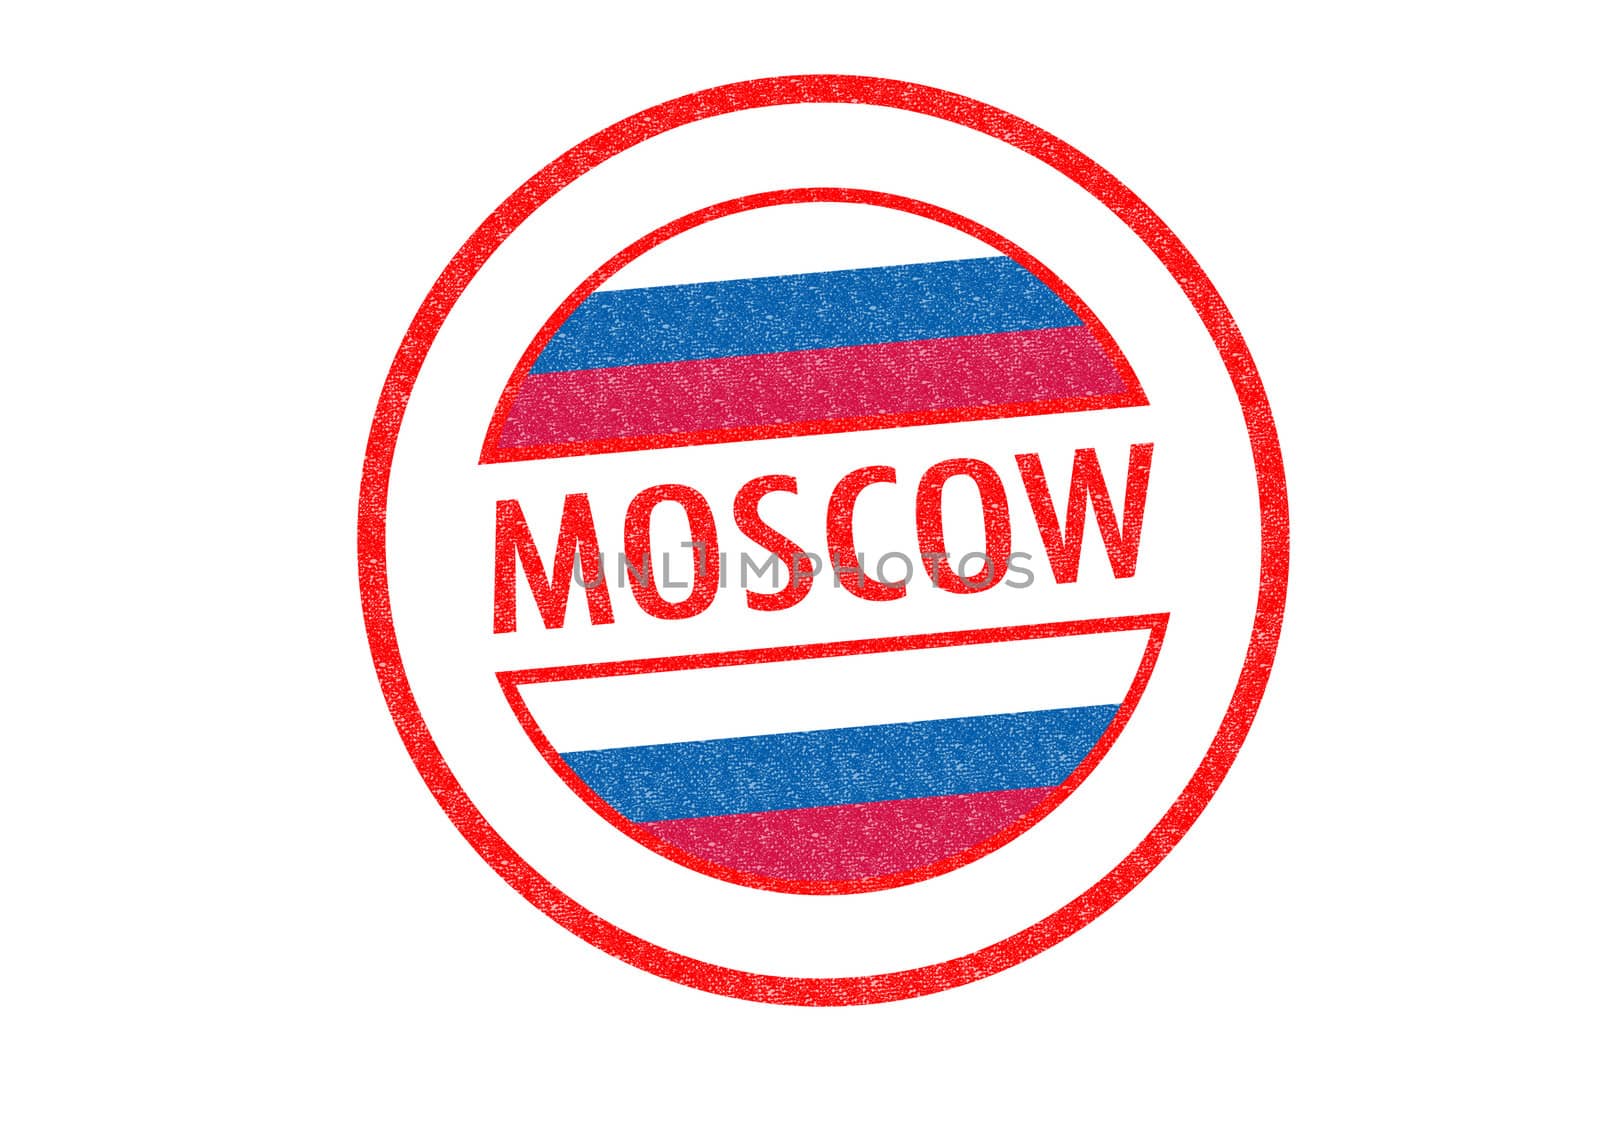 MOSCOW by chrisdorney